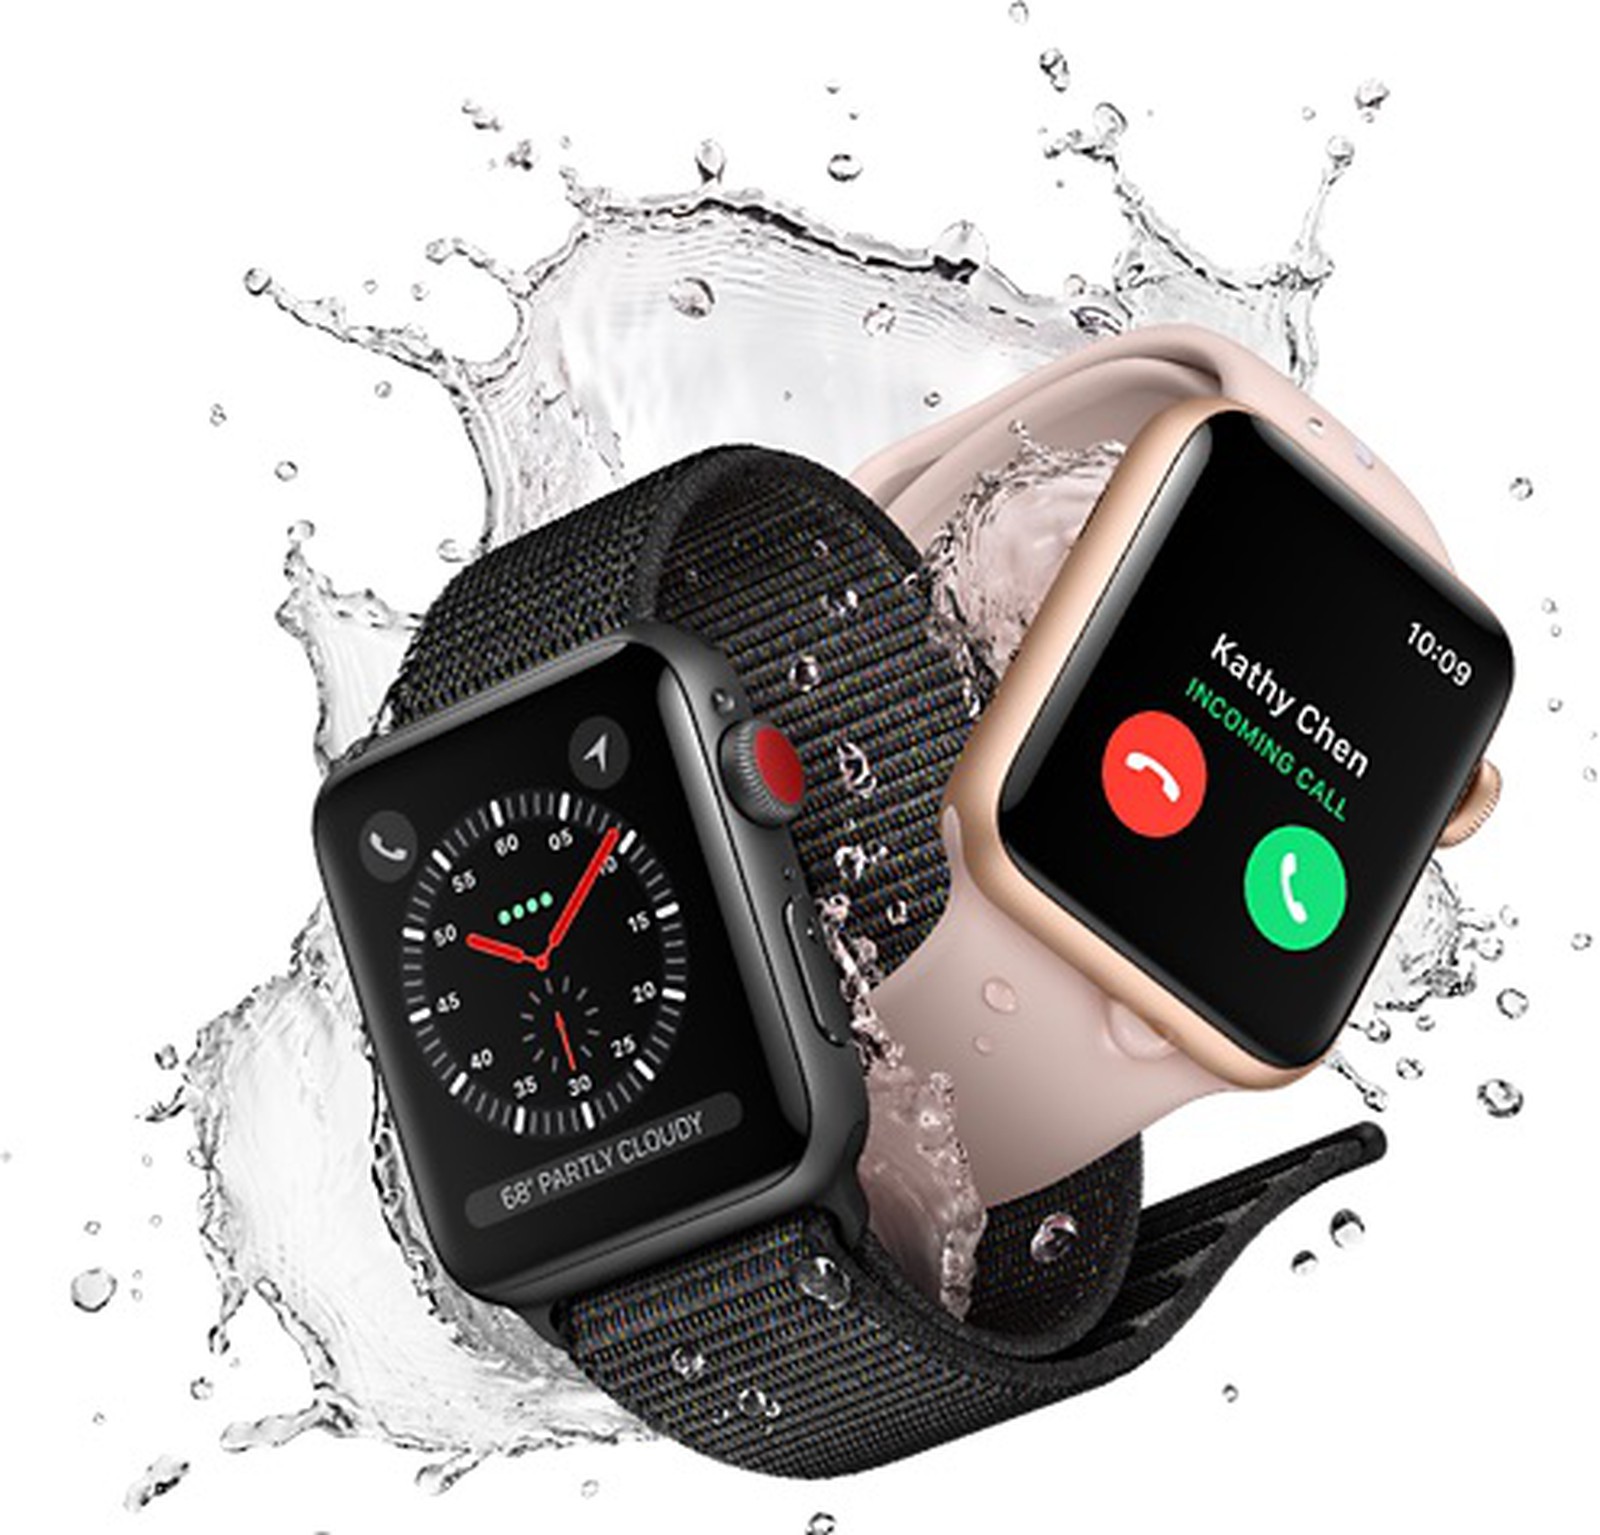 Apple Watch Series 3: LTE Plan Prices on Verizon, AT&T, Sprint, T